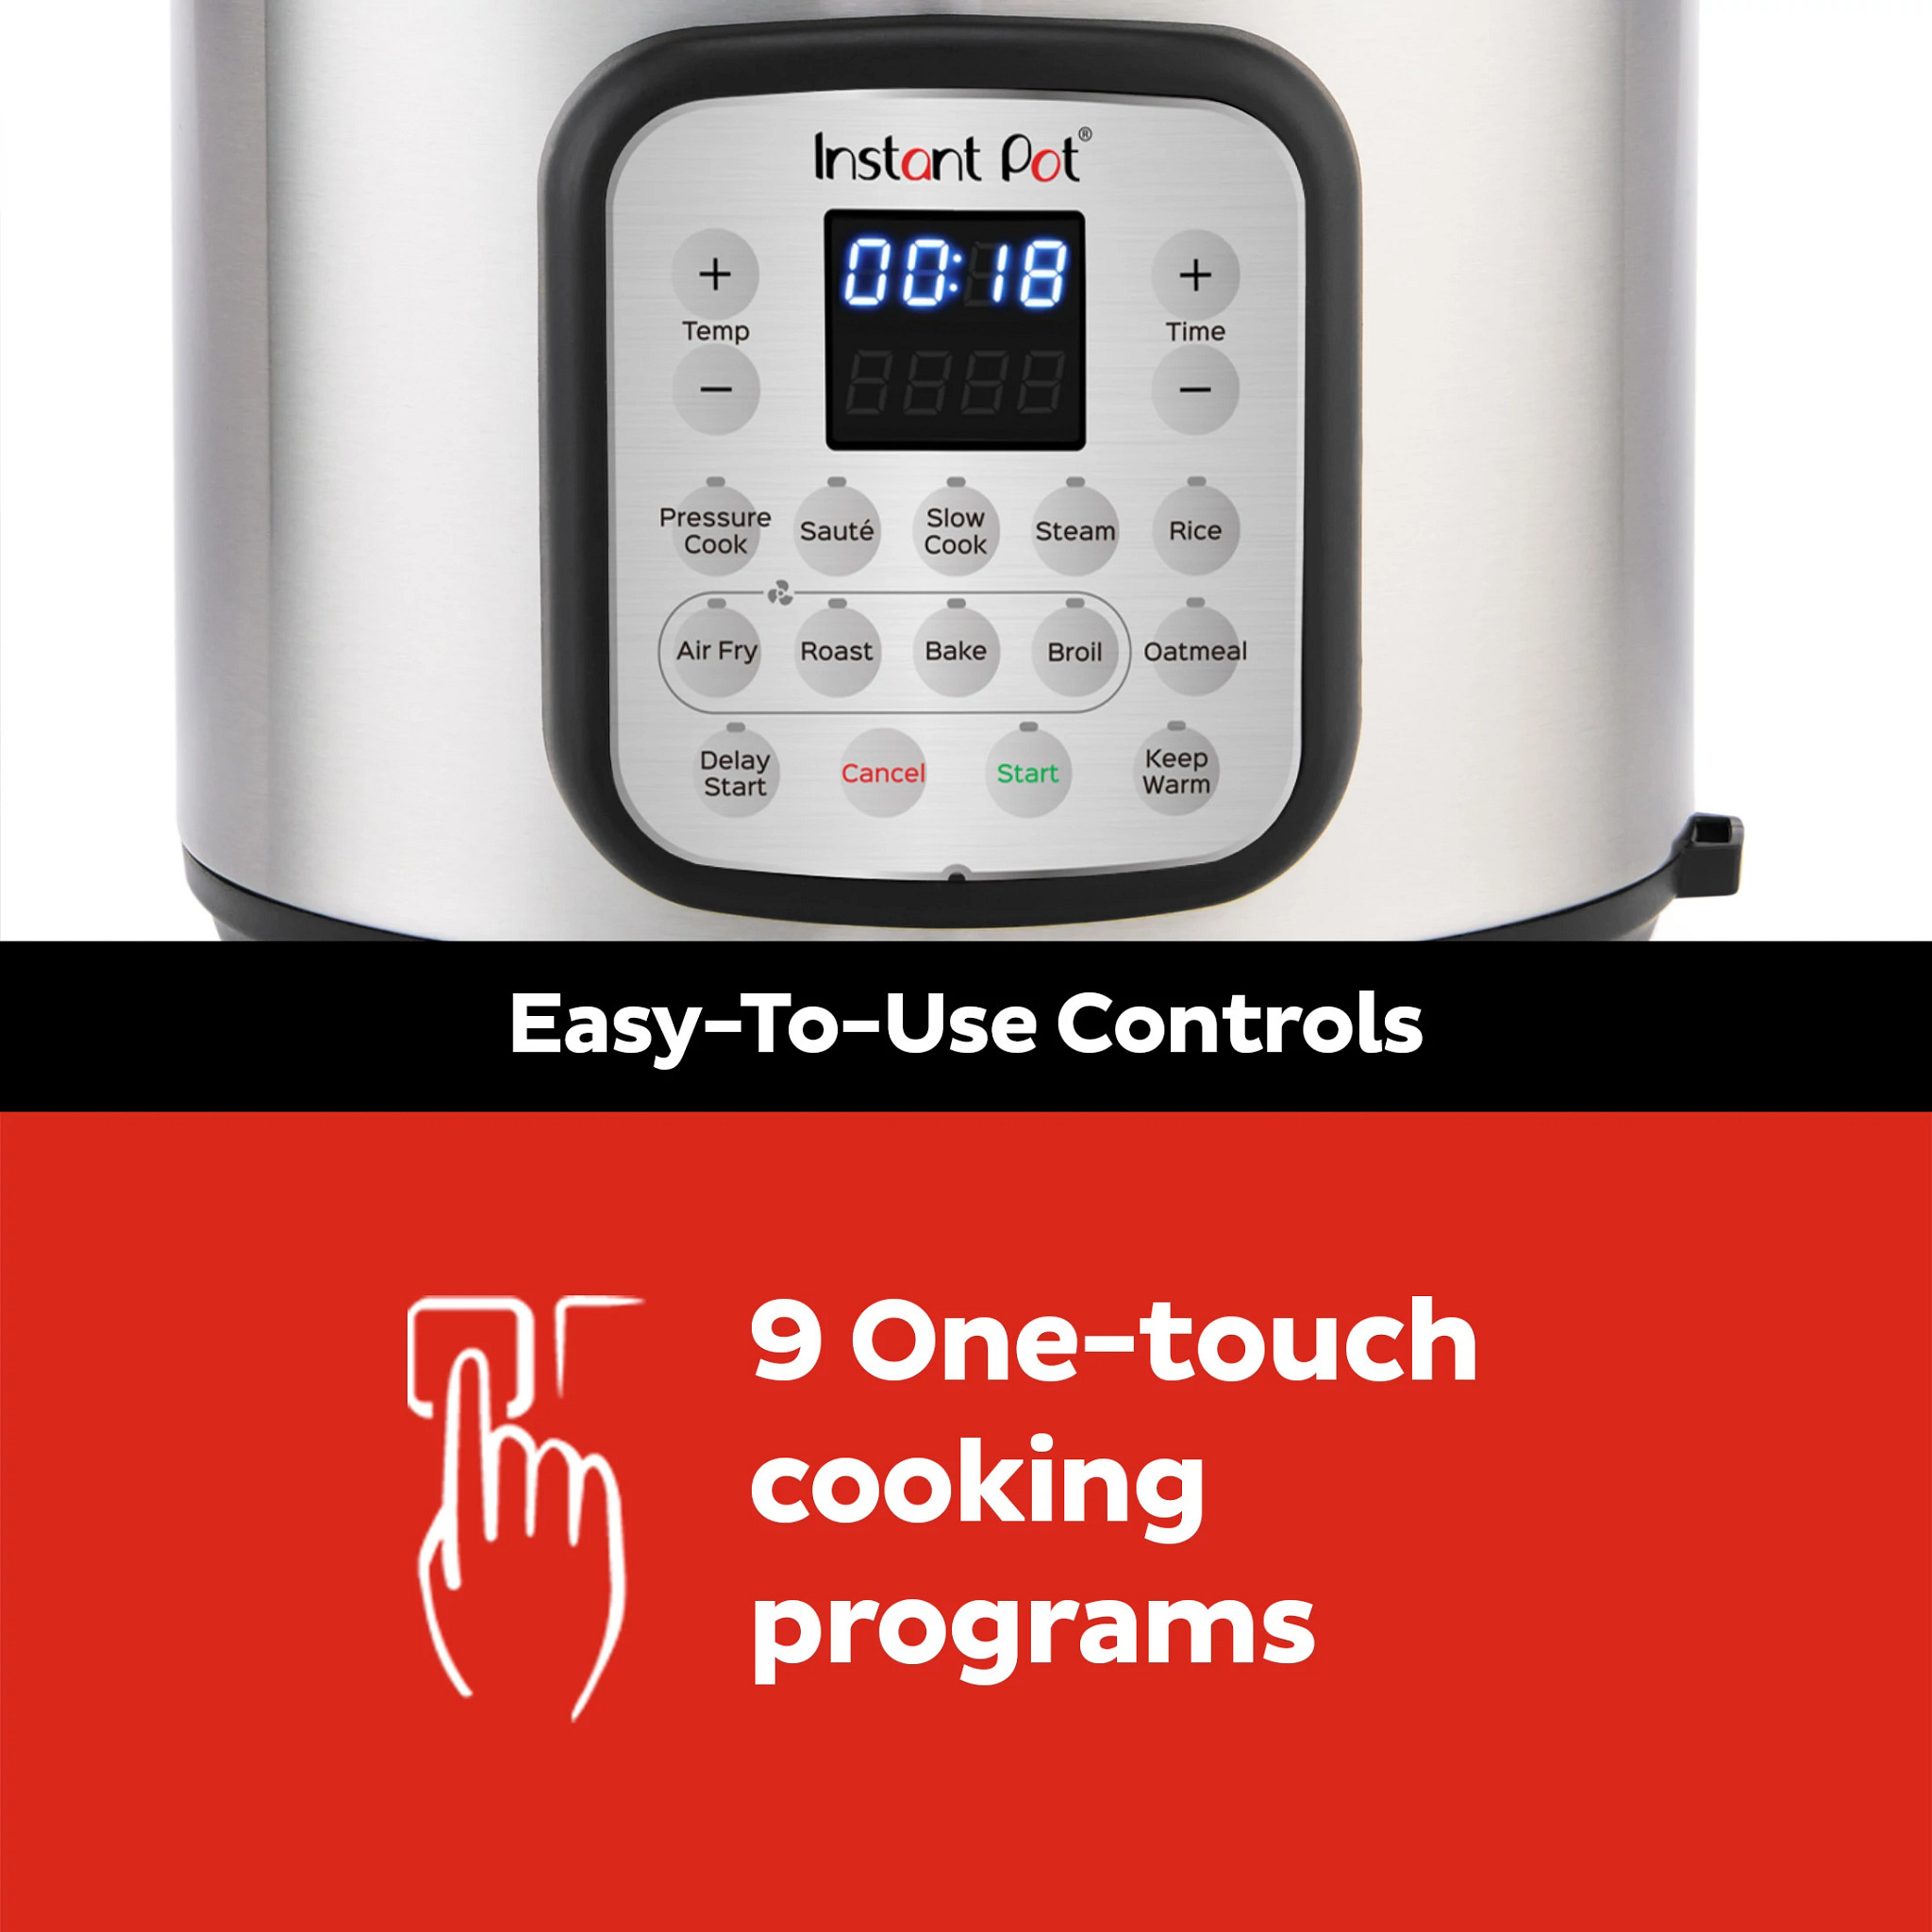 Instant Pot 8 Quart Crisp Multi-Cooker + Air Fryer, 9-in-1: Pressure Cook, Steam, Slow Cook, Sauté, Air Fry, Bake, Broil, Roast, Keep Warm, Rice, Oatmeal - image 7 of 17